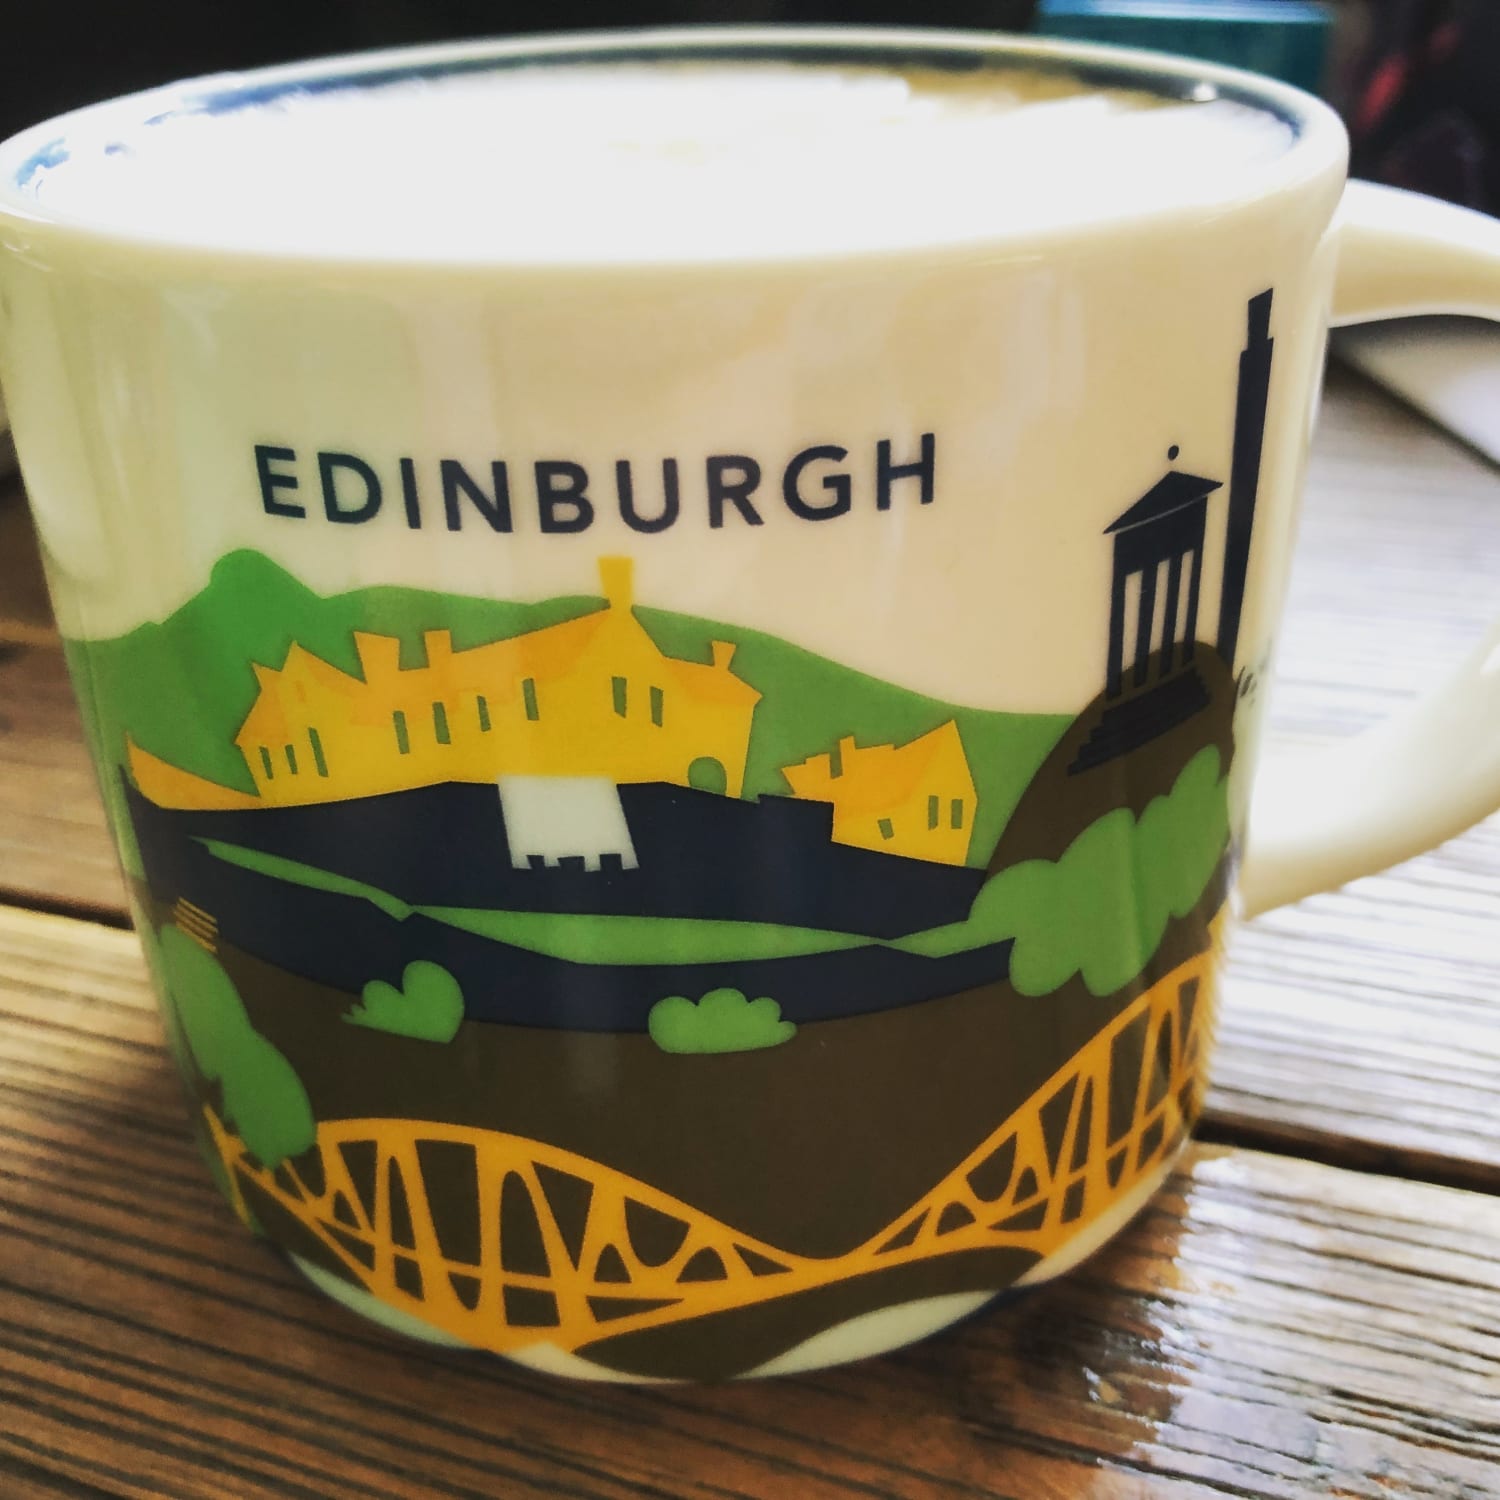 If We Were Having Coffee In Edinburgh